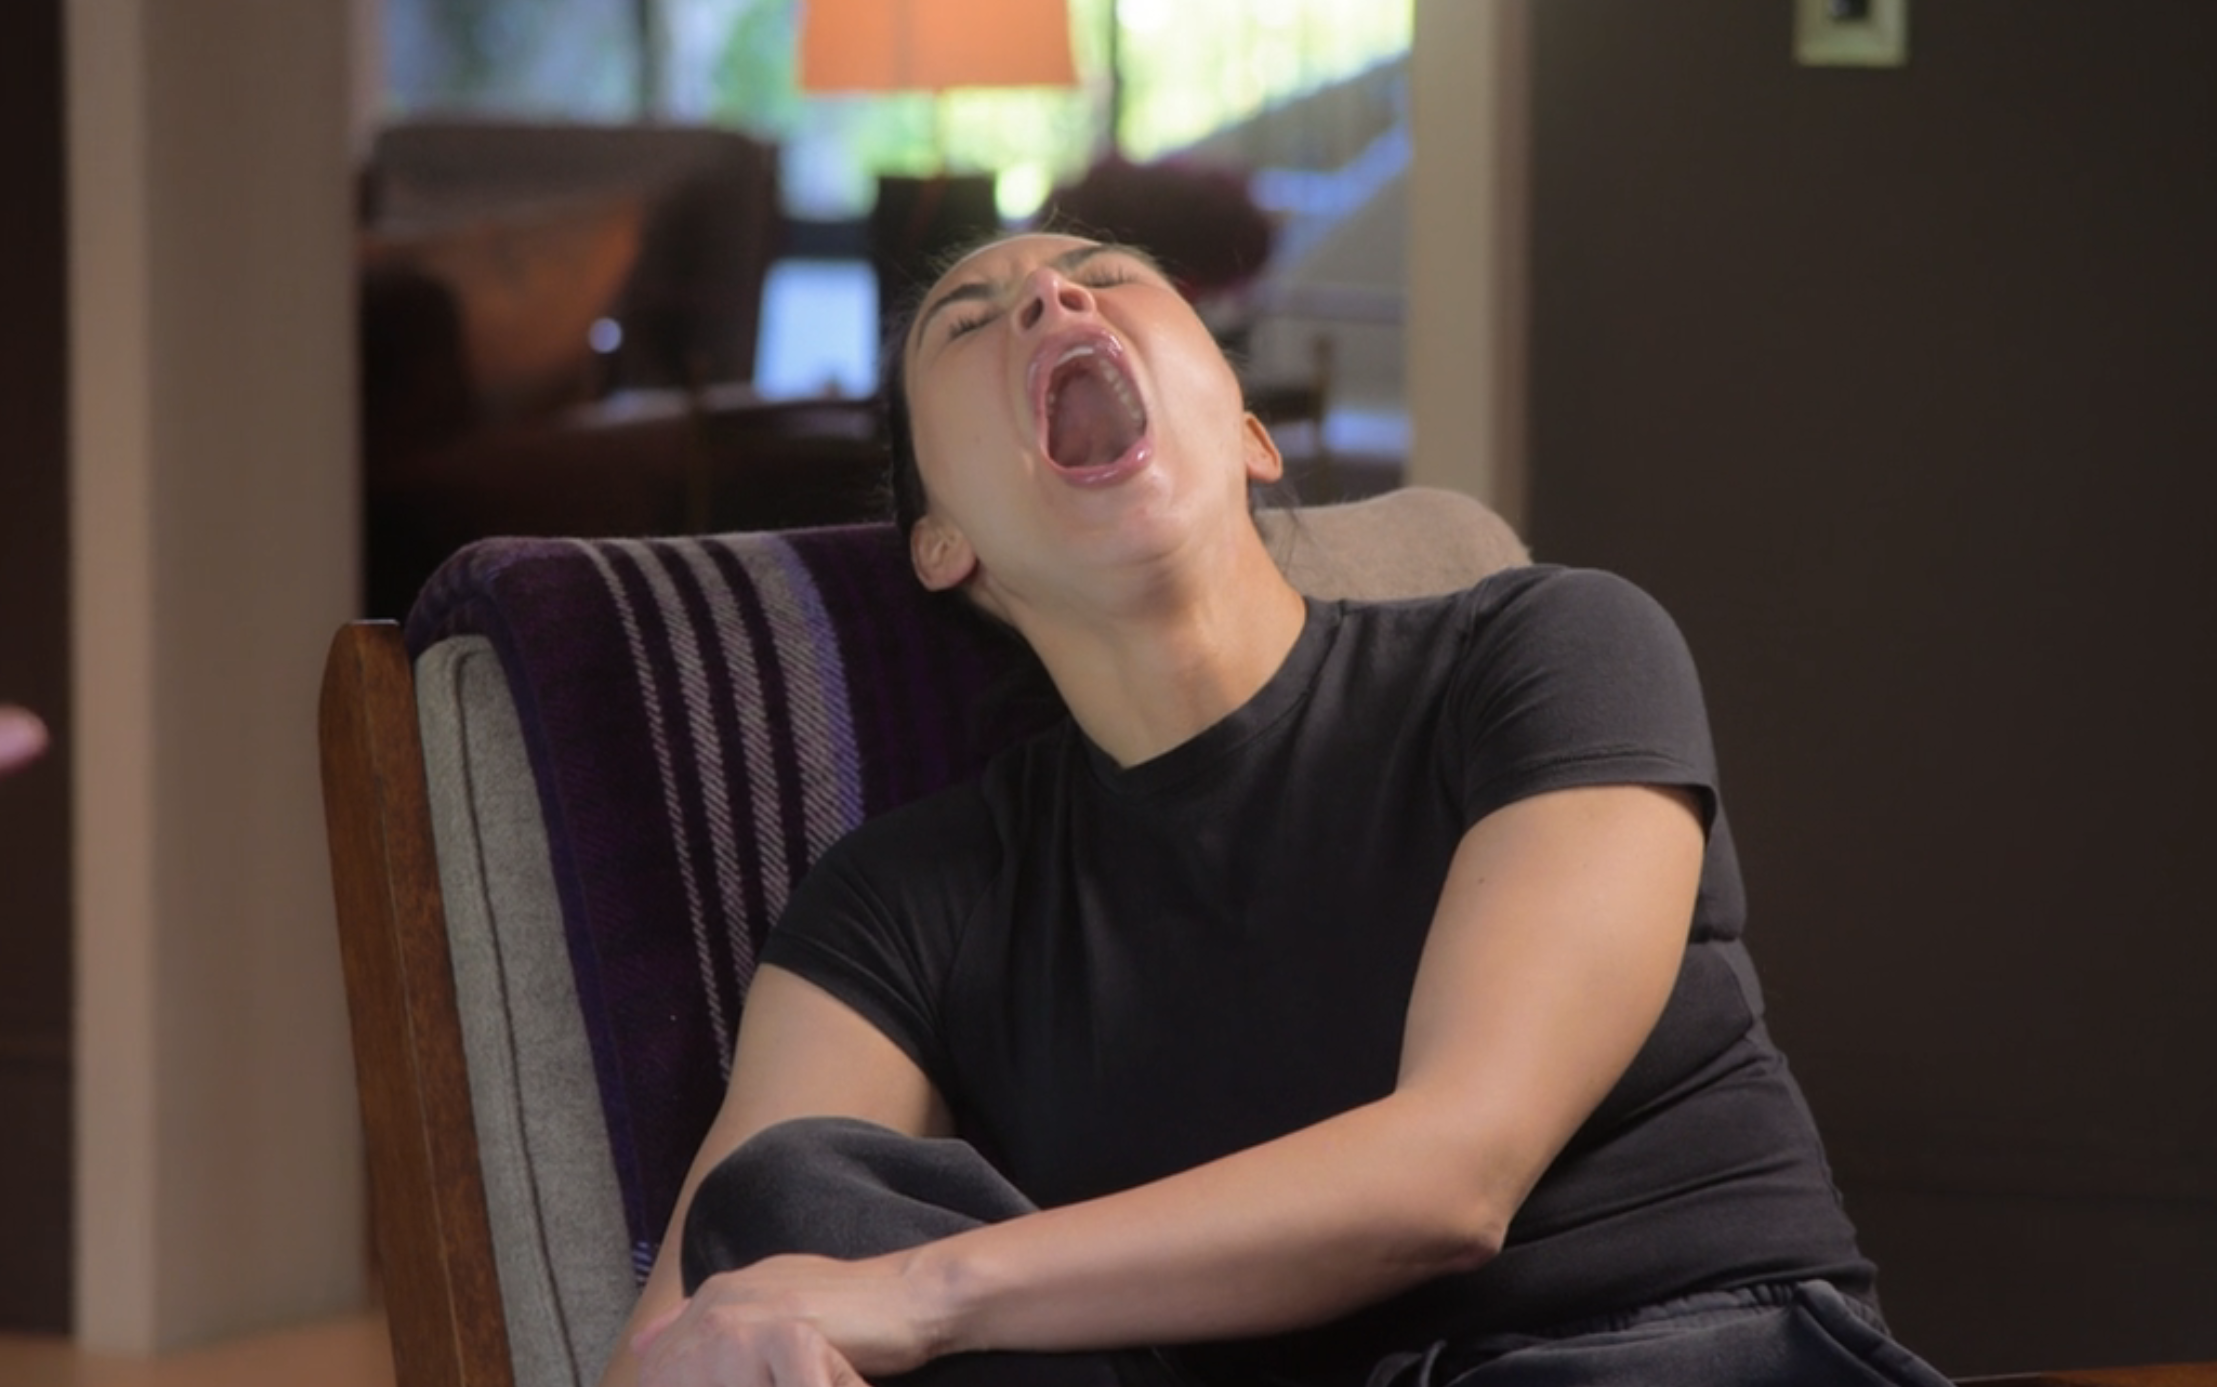 Kim yawning widely